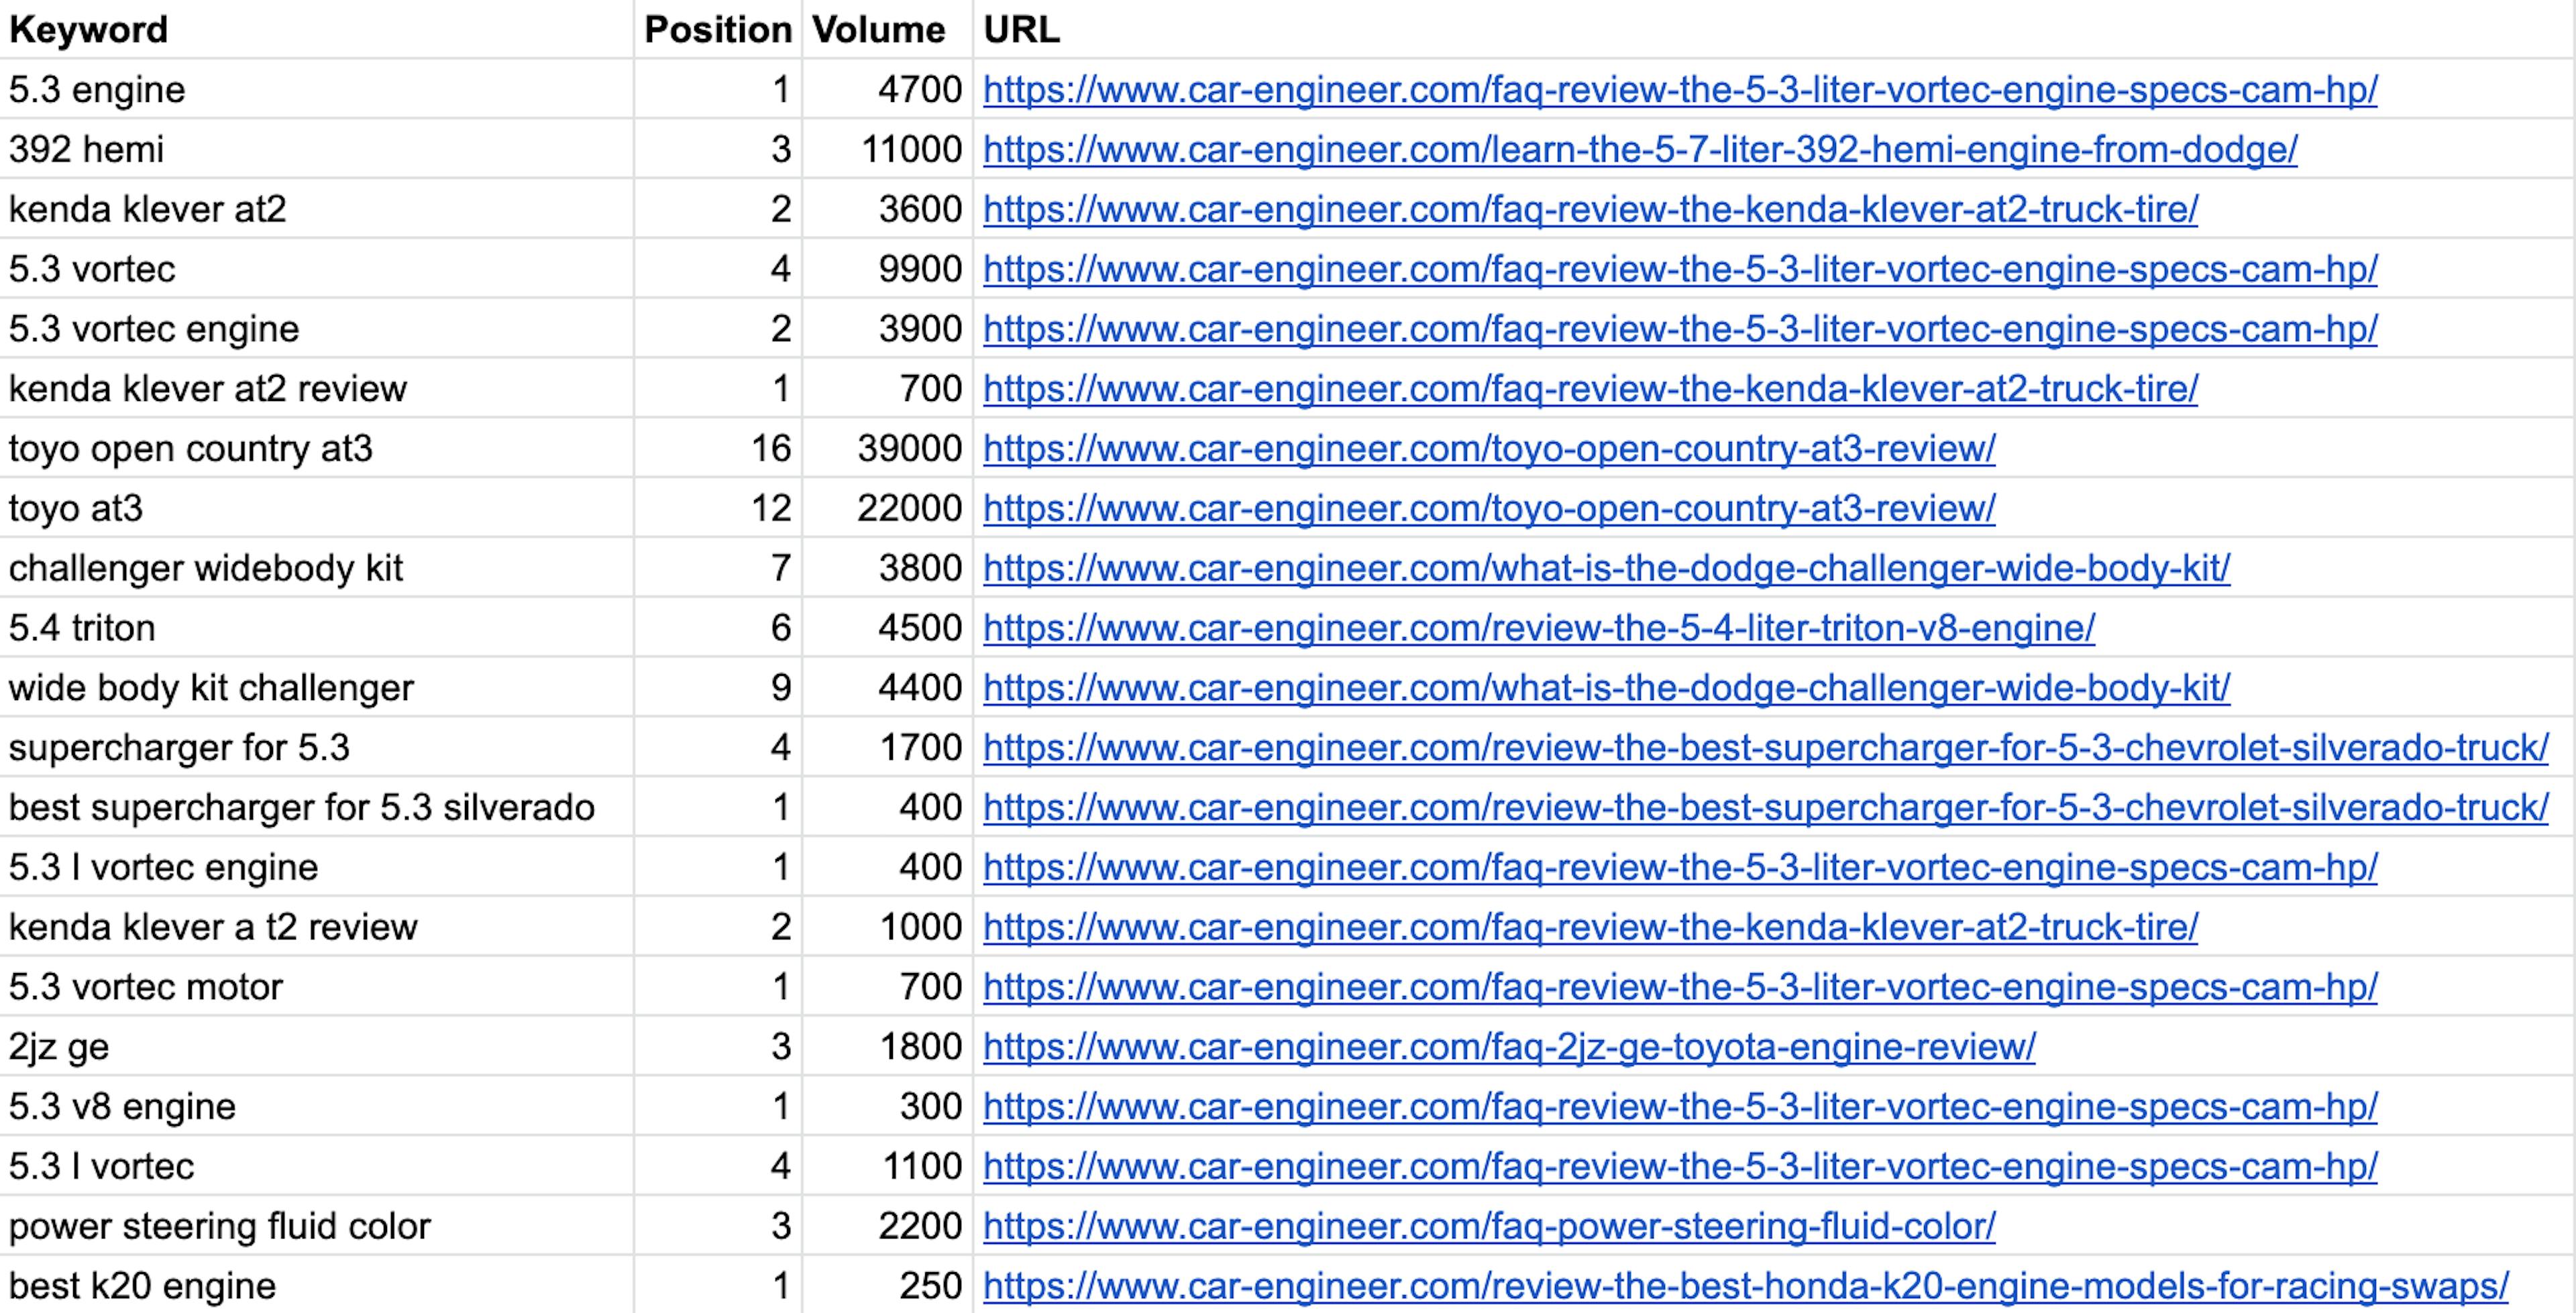 sample keyword rankings